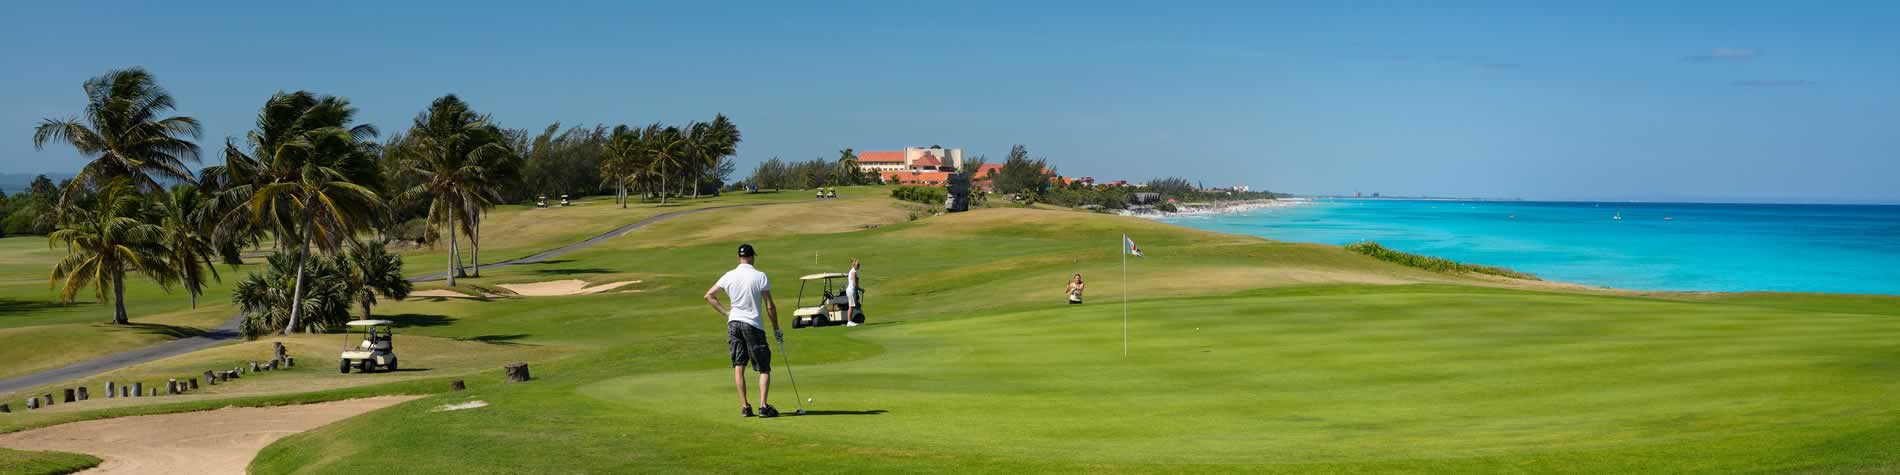 Varadero Golf Club Las Americas